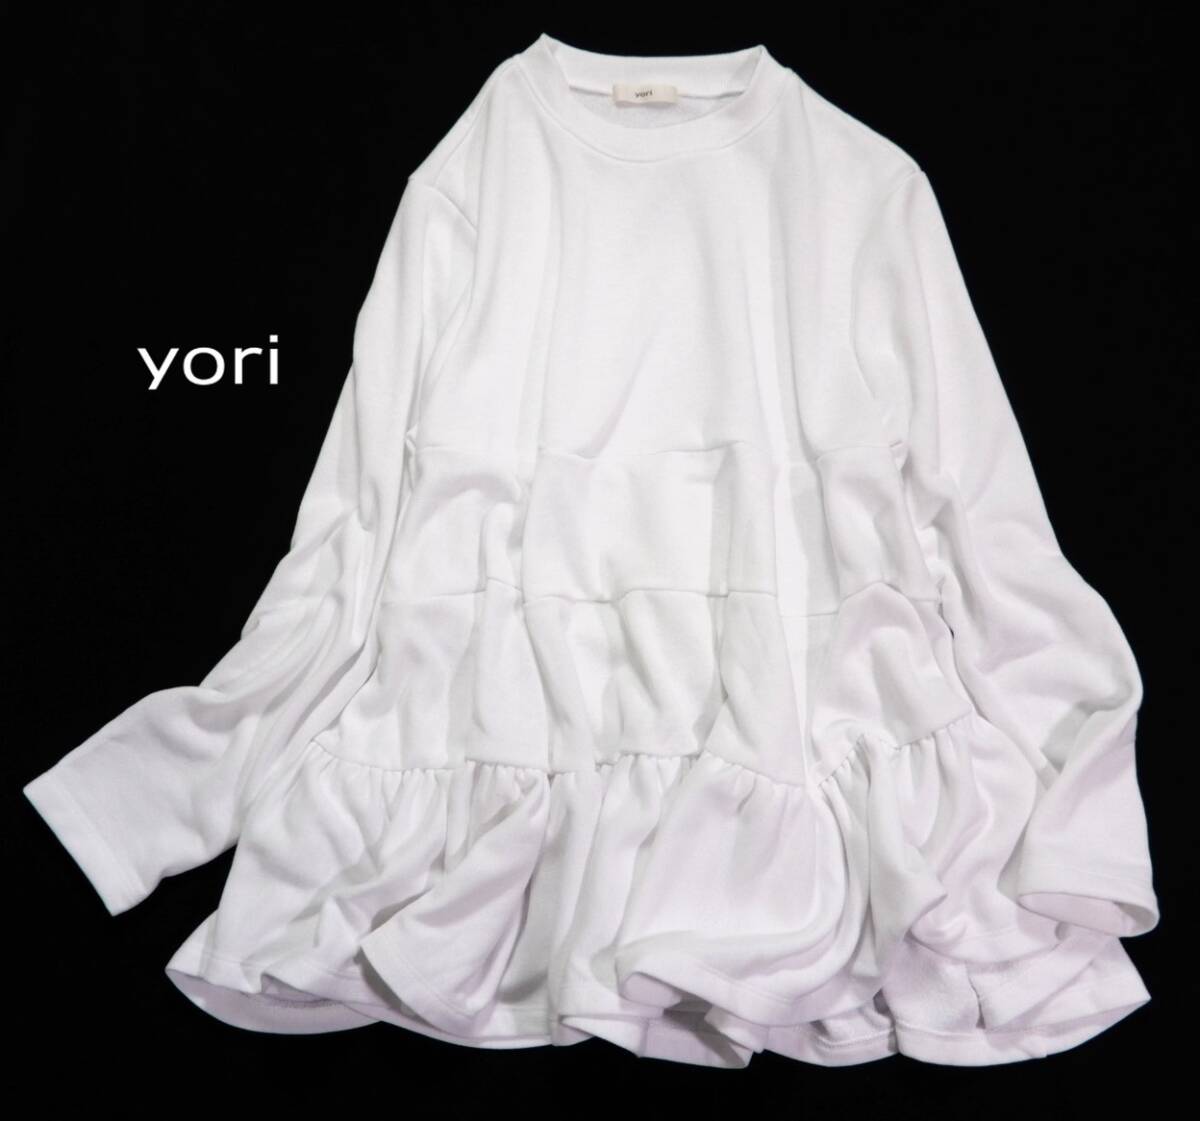 yoriyoli lavatory possibility A line flair sweatshirt pull over reverse side wool tia-do frill cut and sewn F